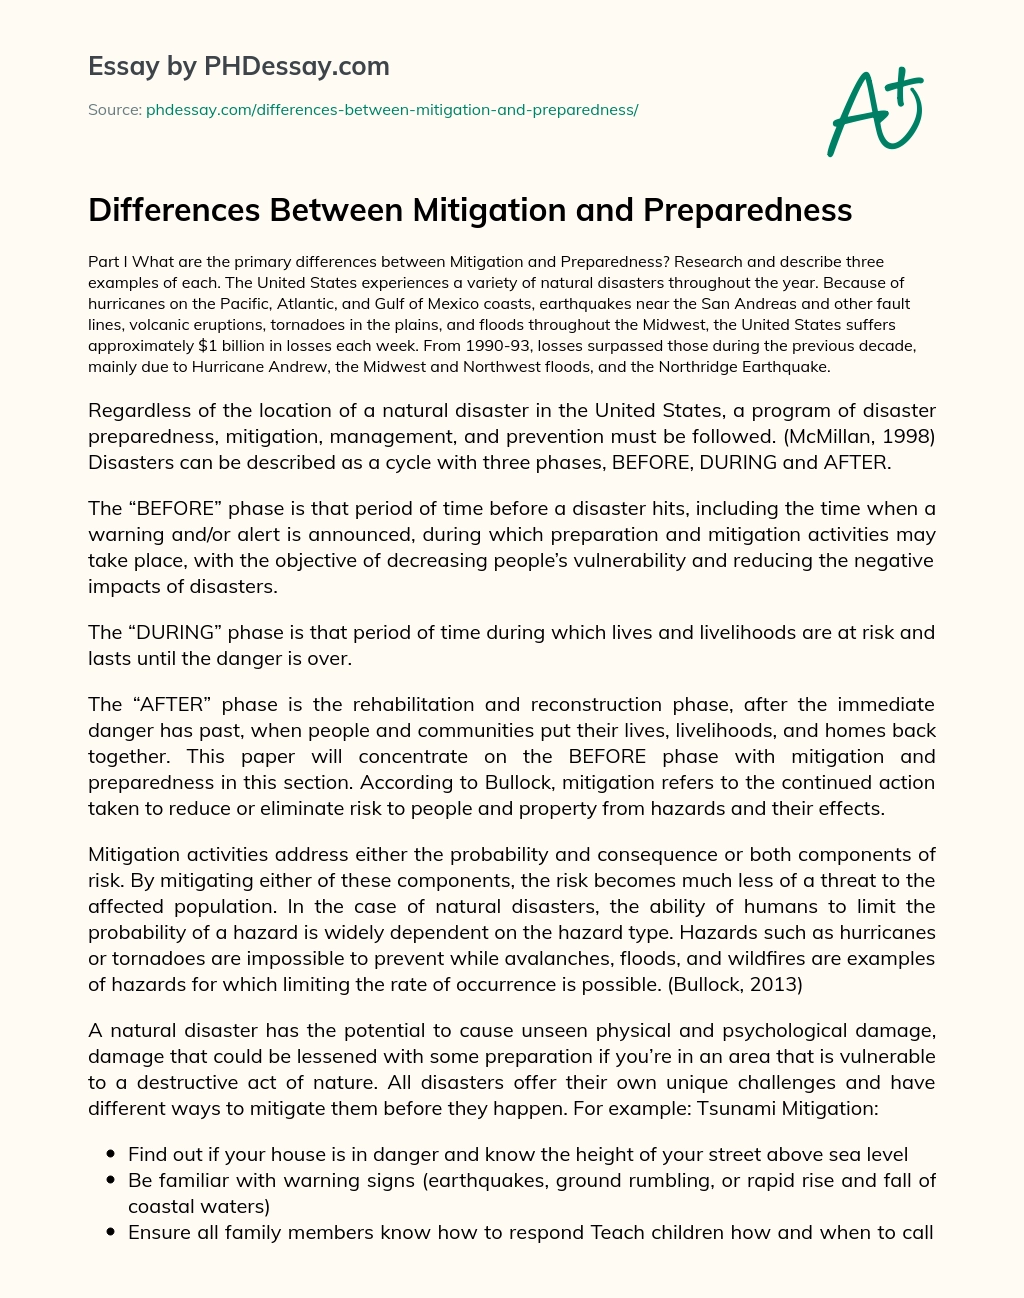 mitigation and preparedness differences